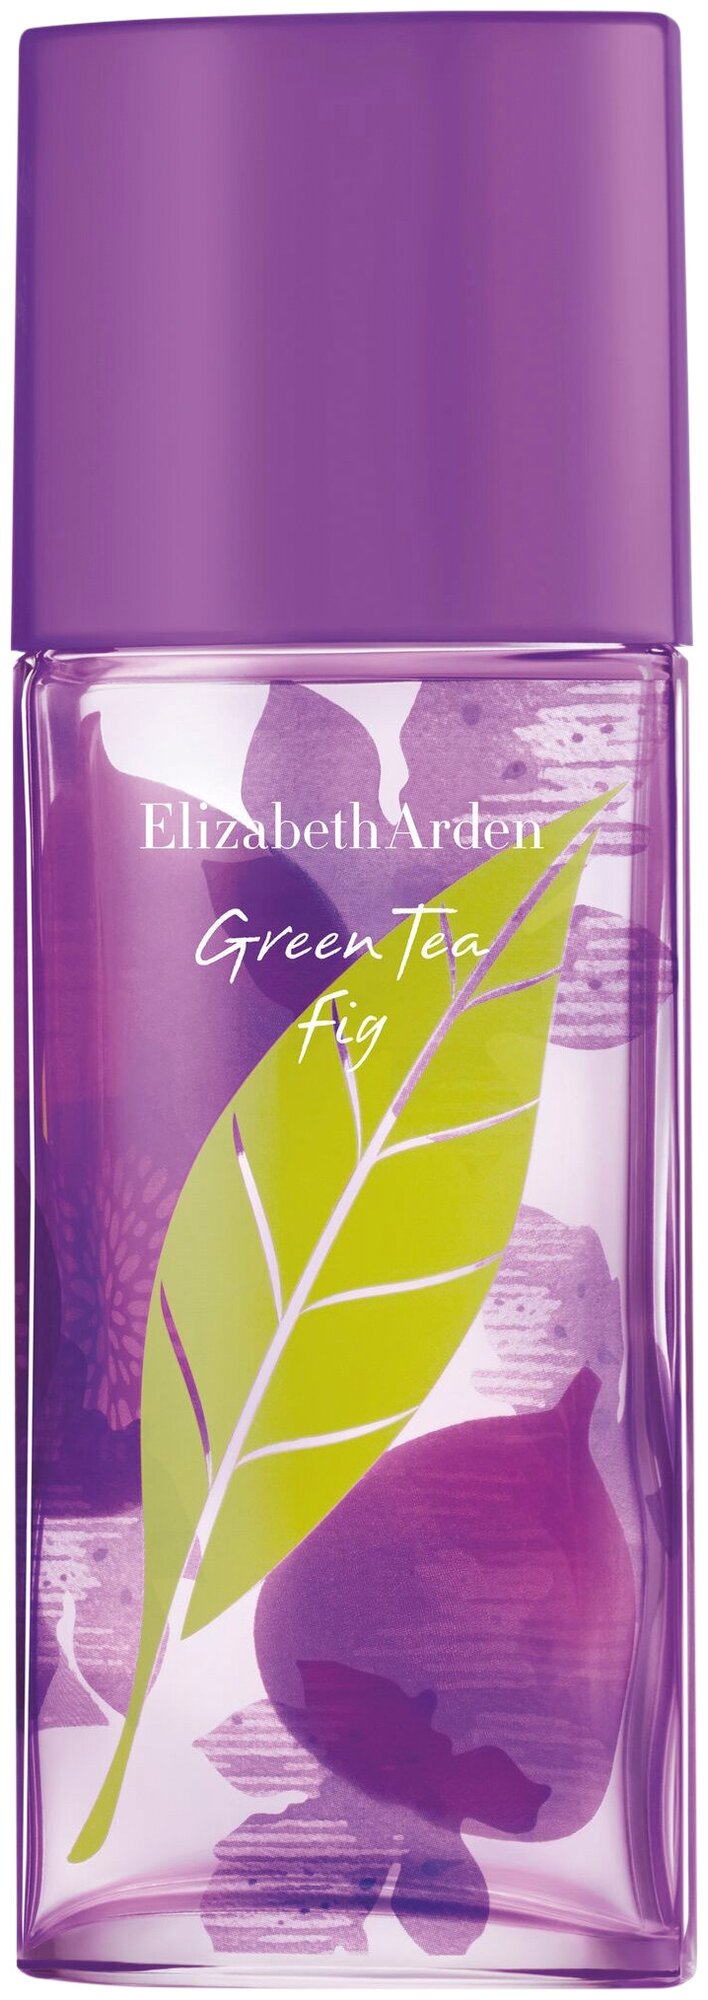 Elizabeth Arden, Green Tea Fig, 100 мл., туалетная вода женская